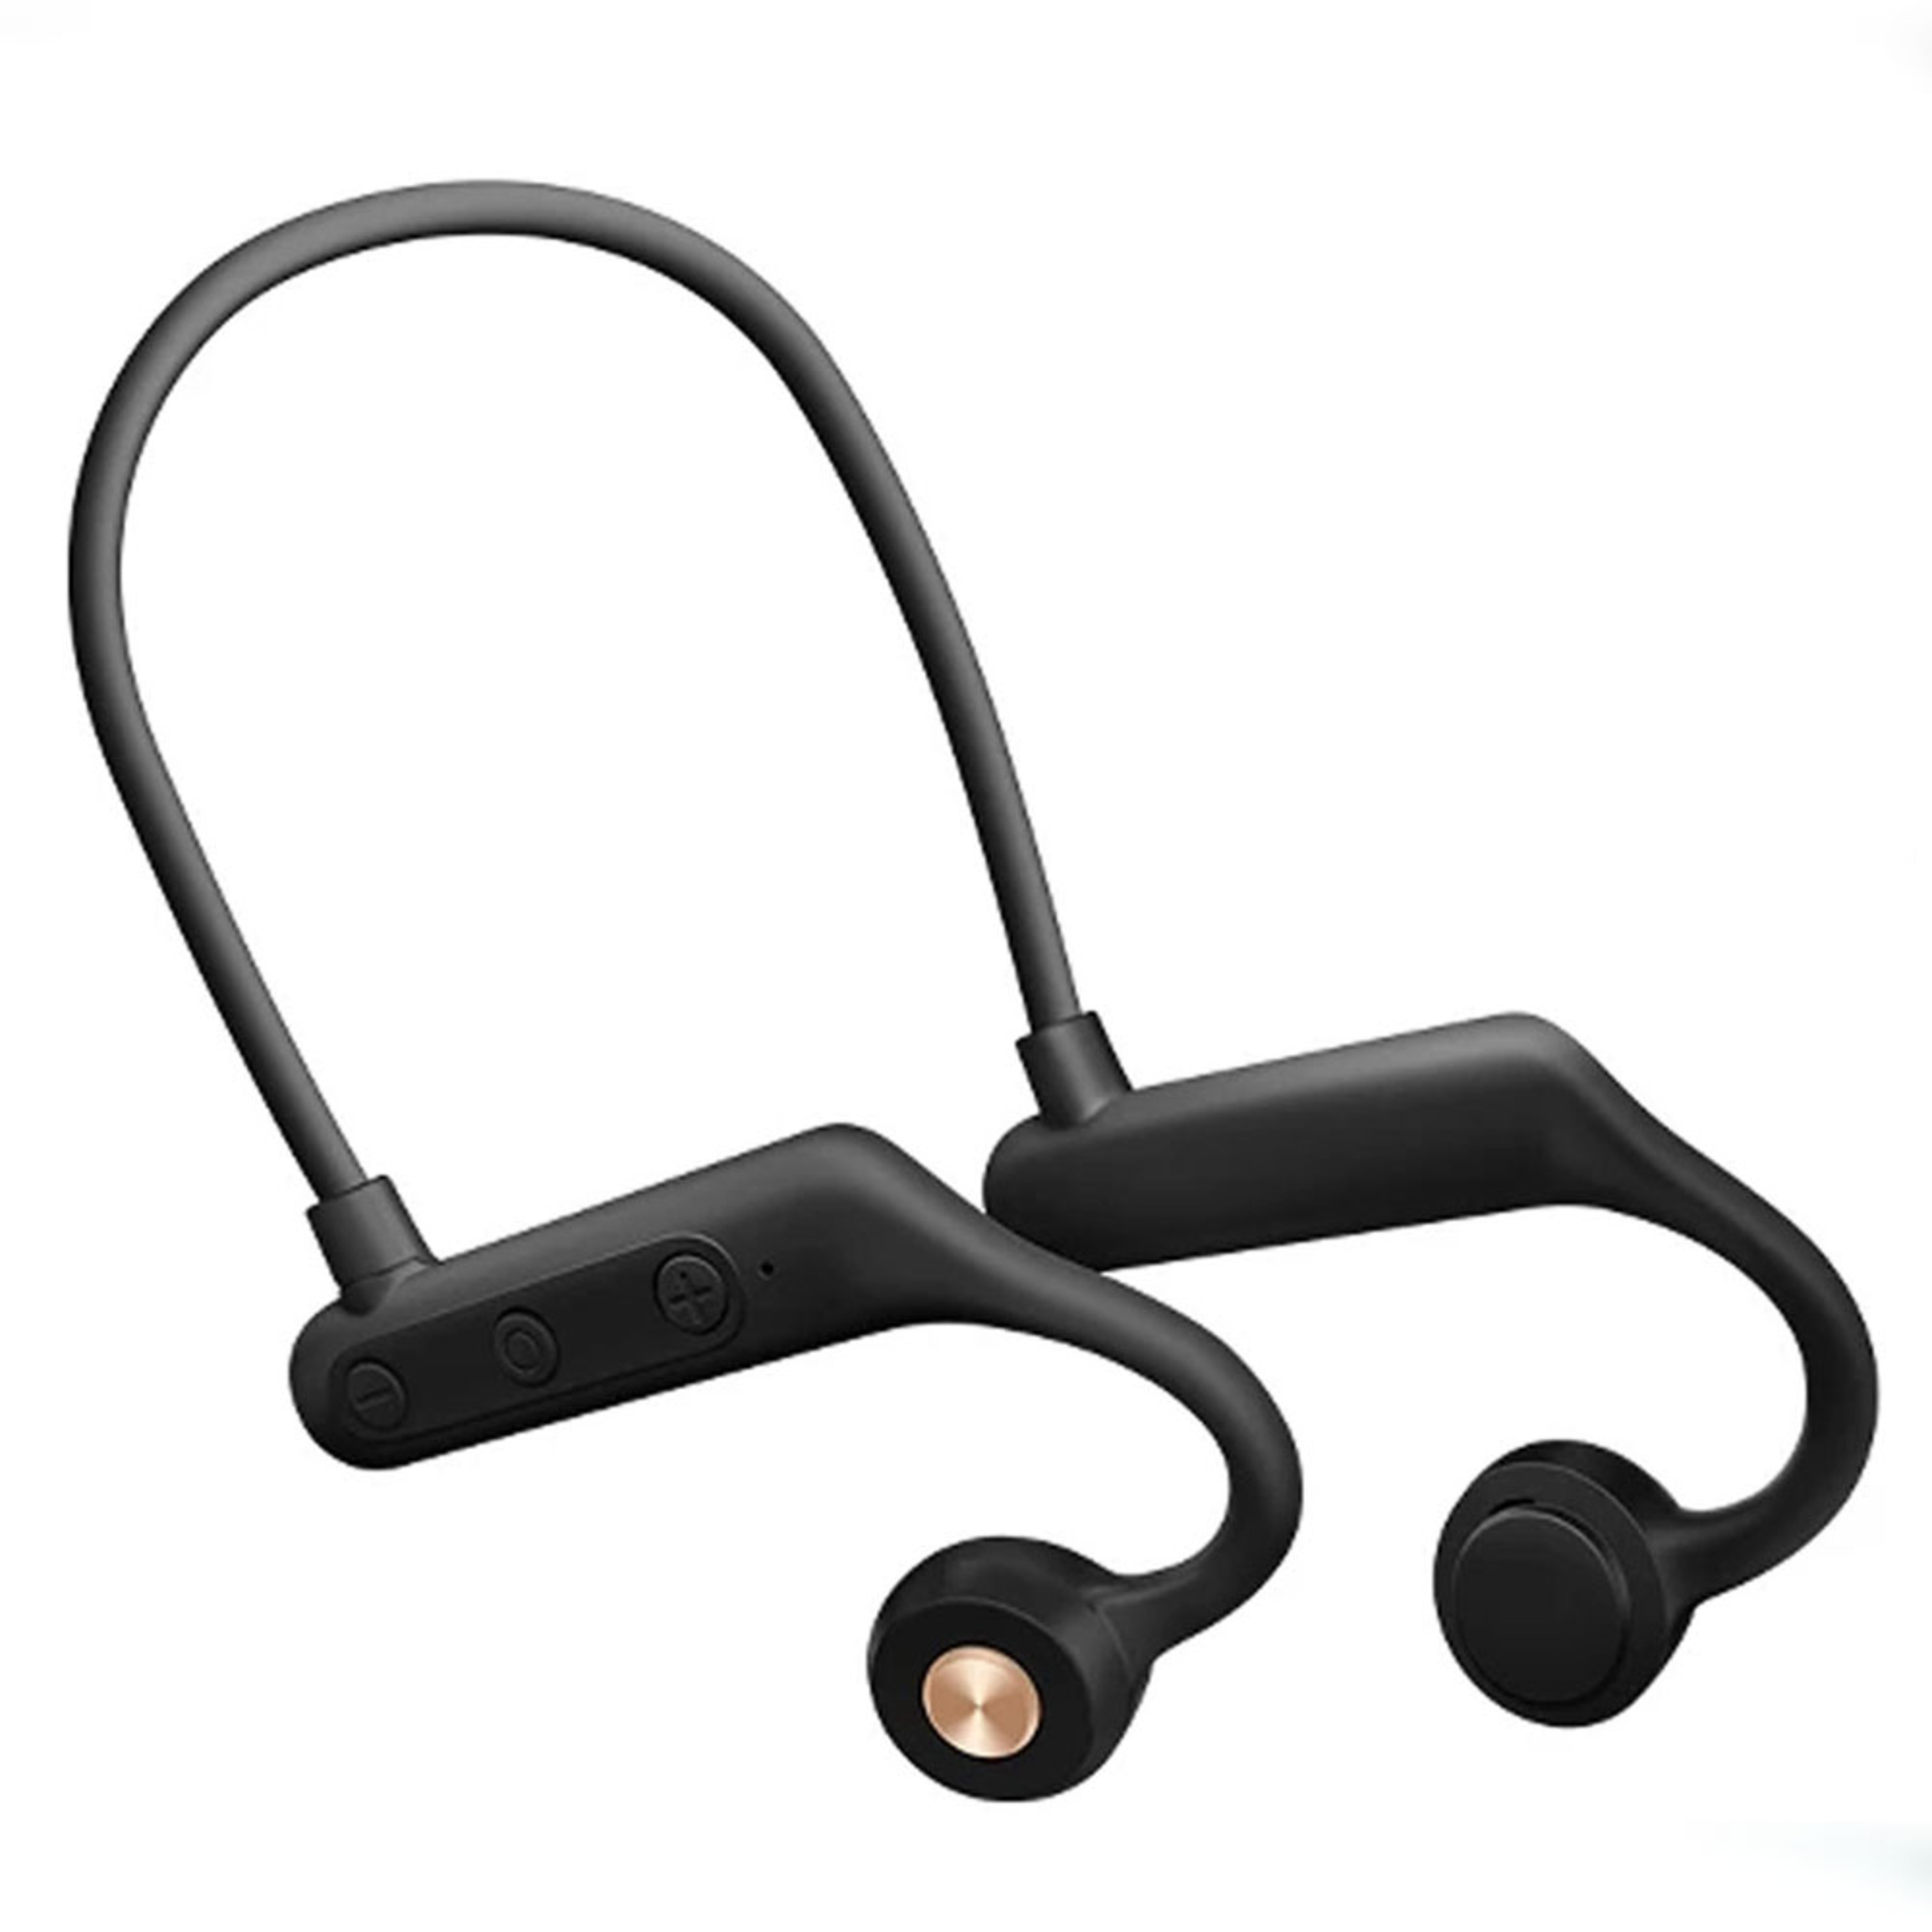 Auriculares Inalambricos Bluetooth Klack - negro - 